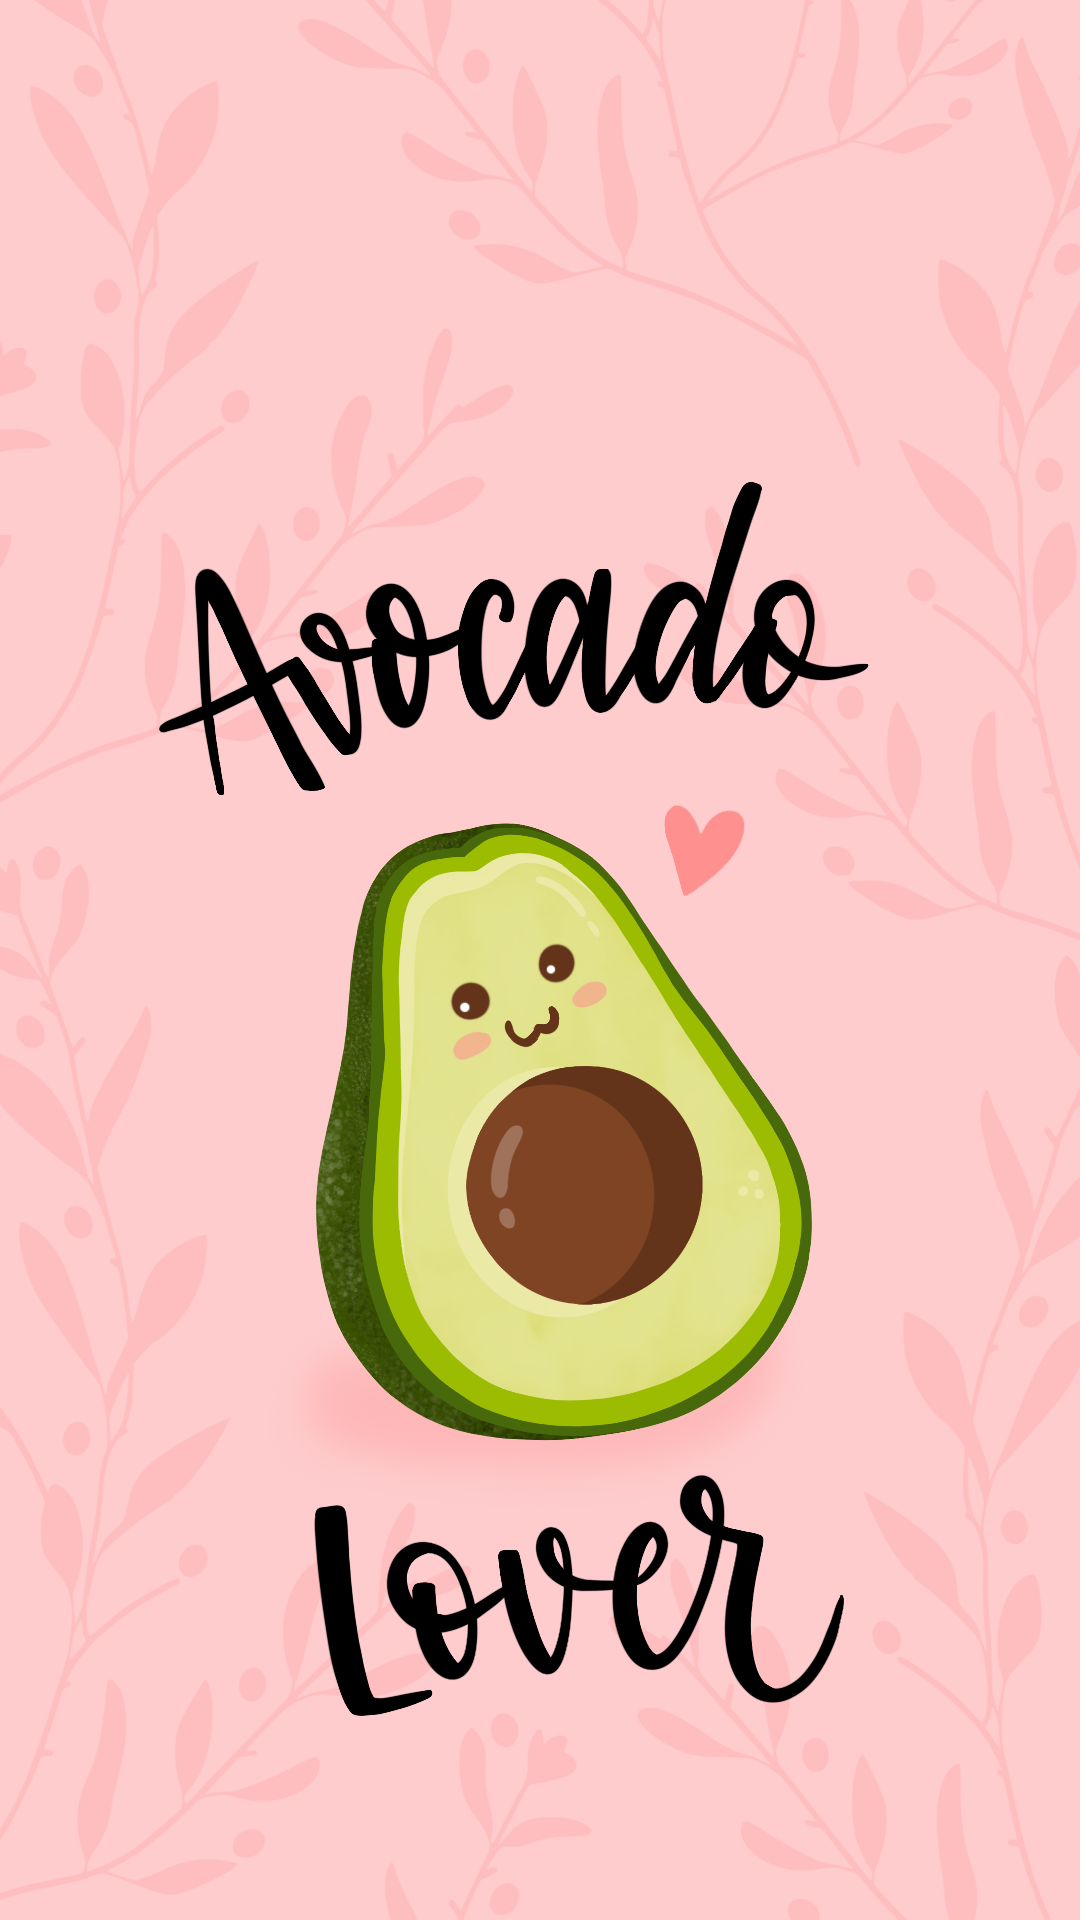 avocado, avocado lovers, food, food lovers, pastel colors